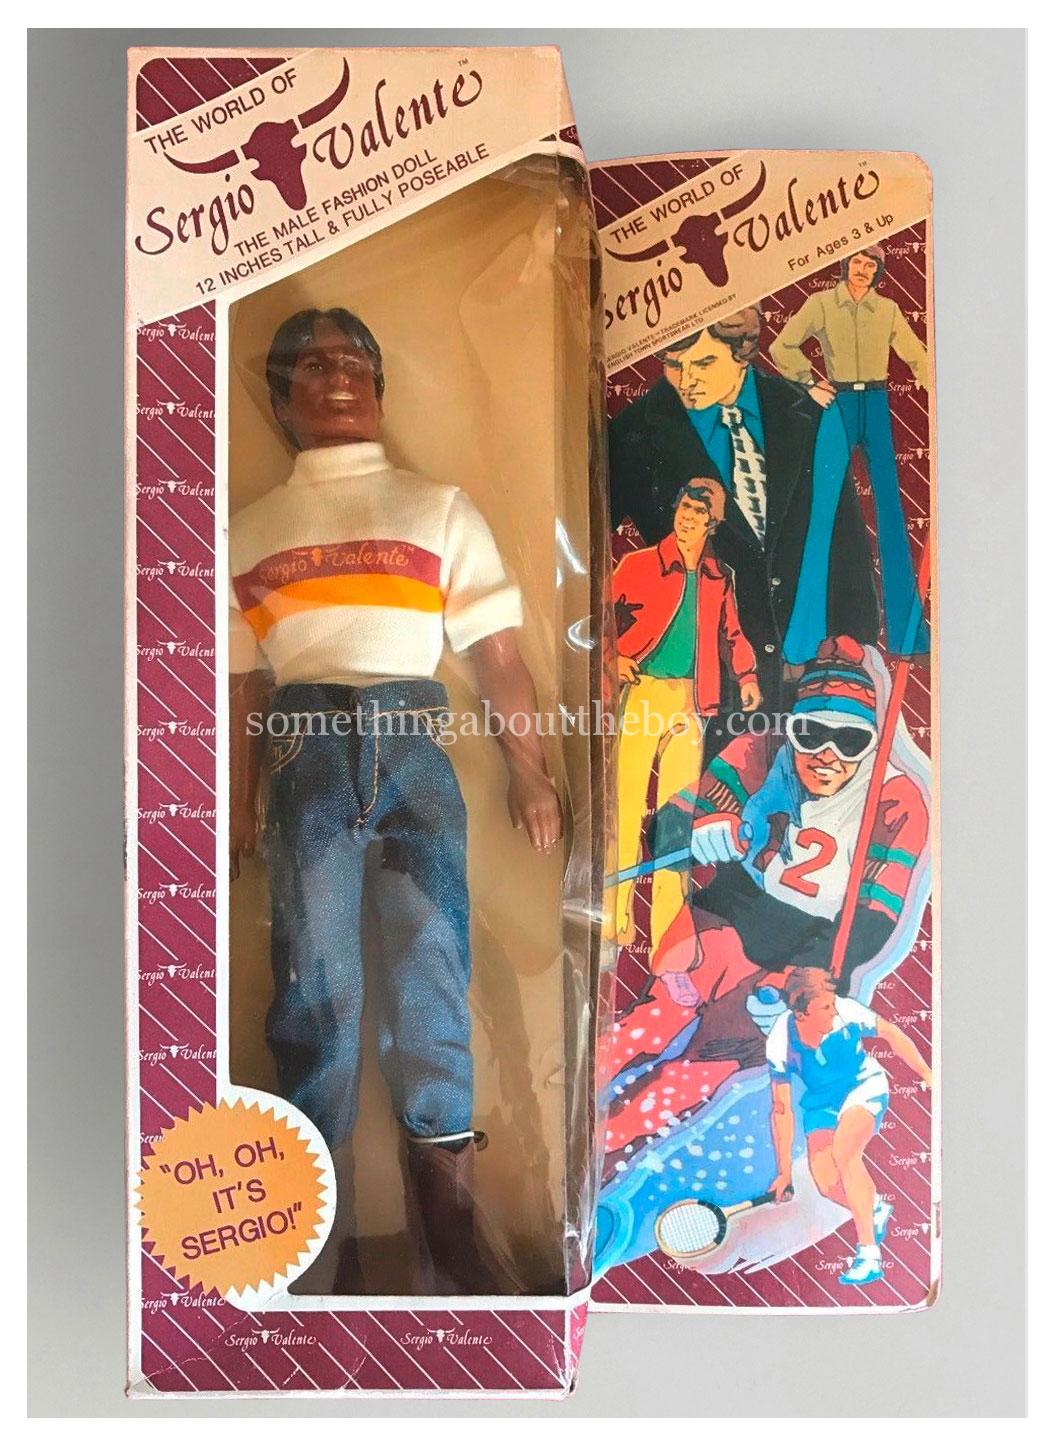 1982 Sergio Valente male fashion doll by Toy-Time Inc.